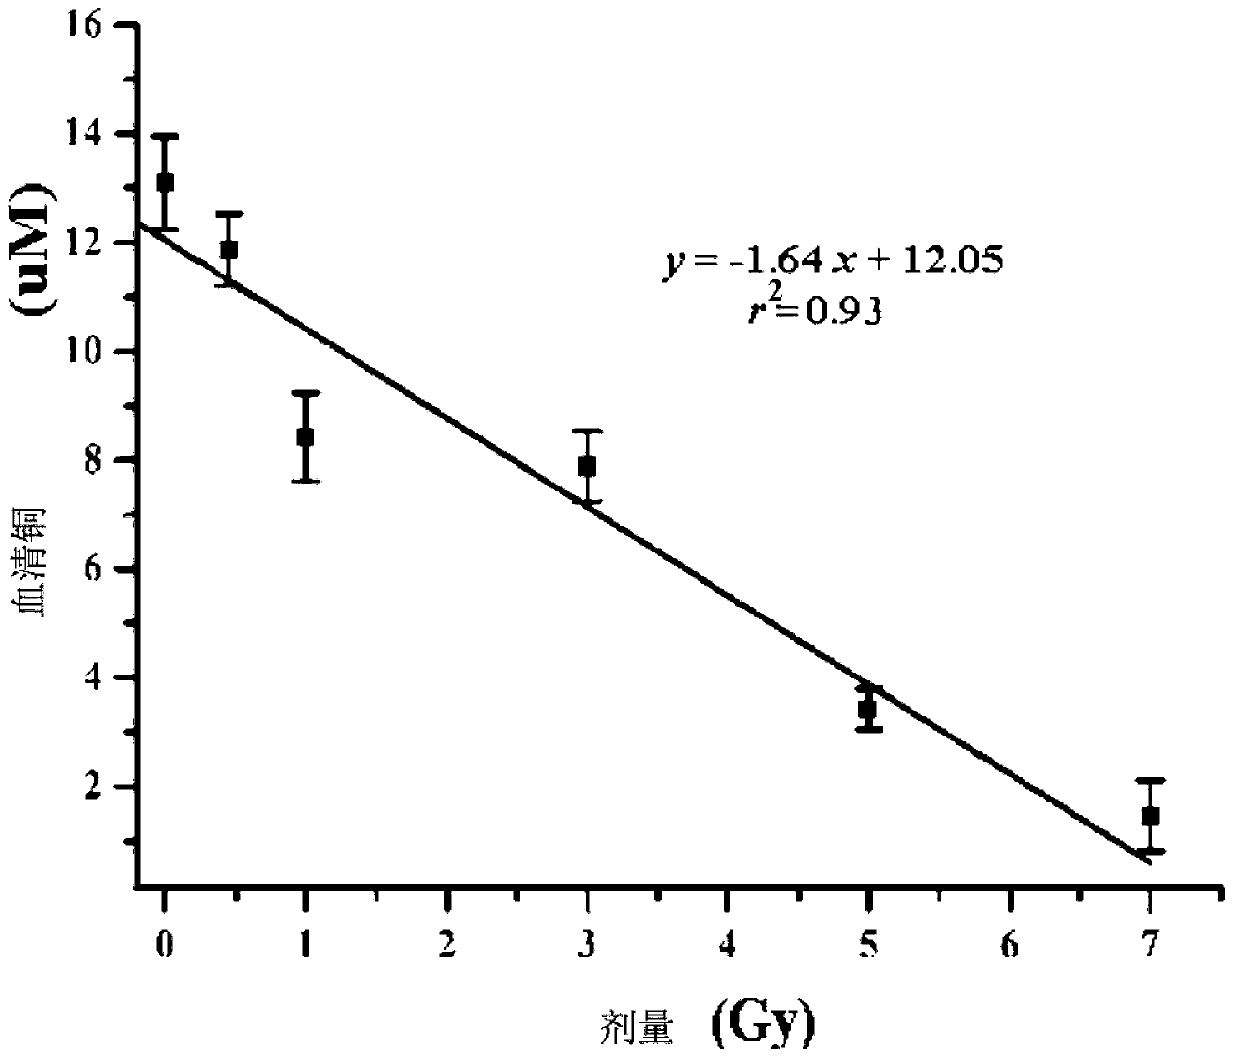 Radiation biological dose estimation method based on serum iron/serum copper